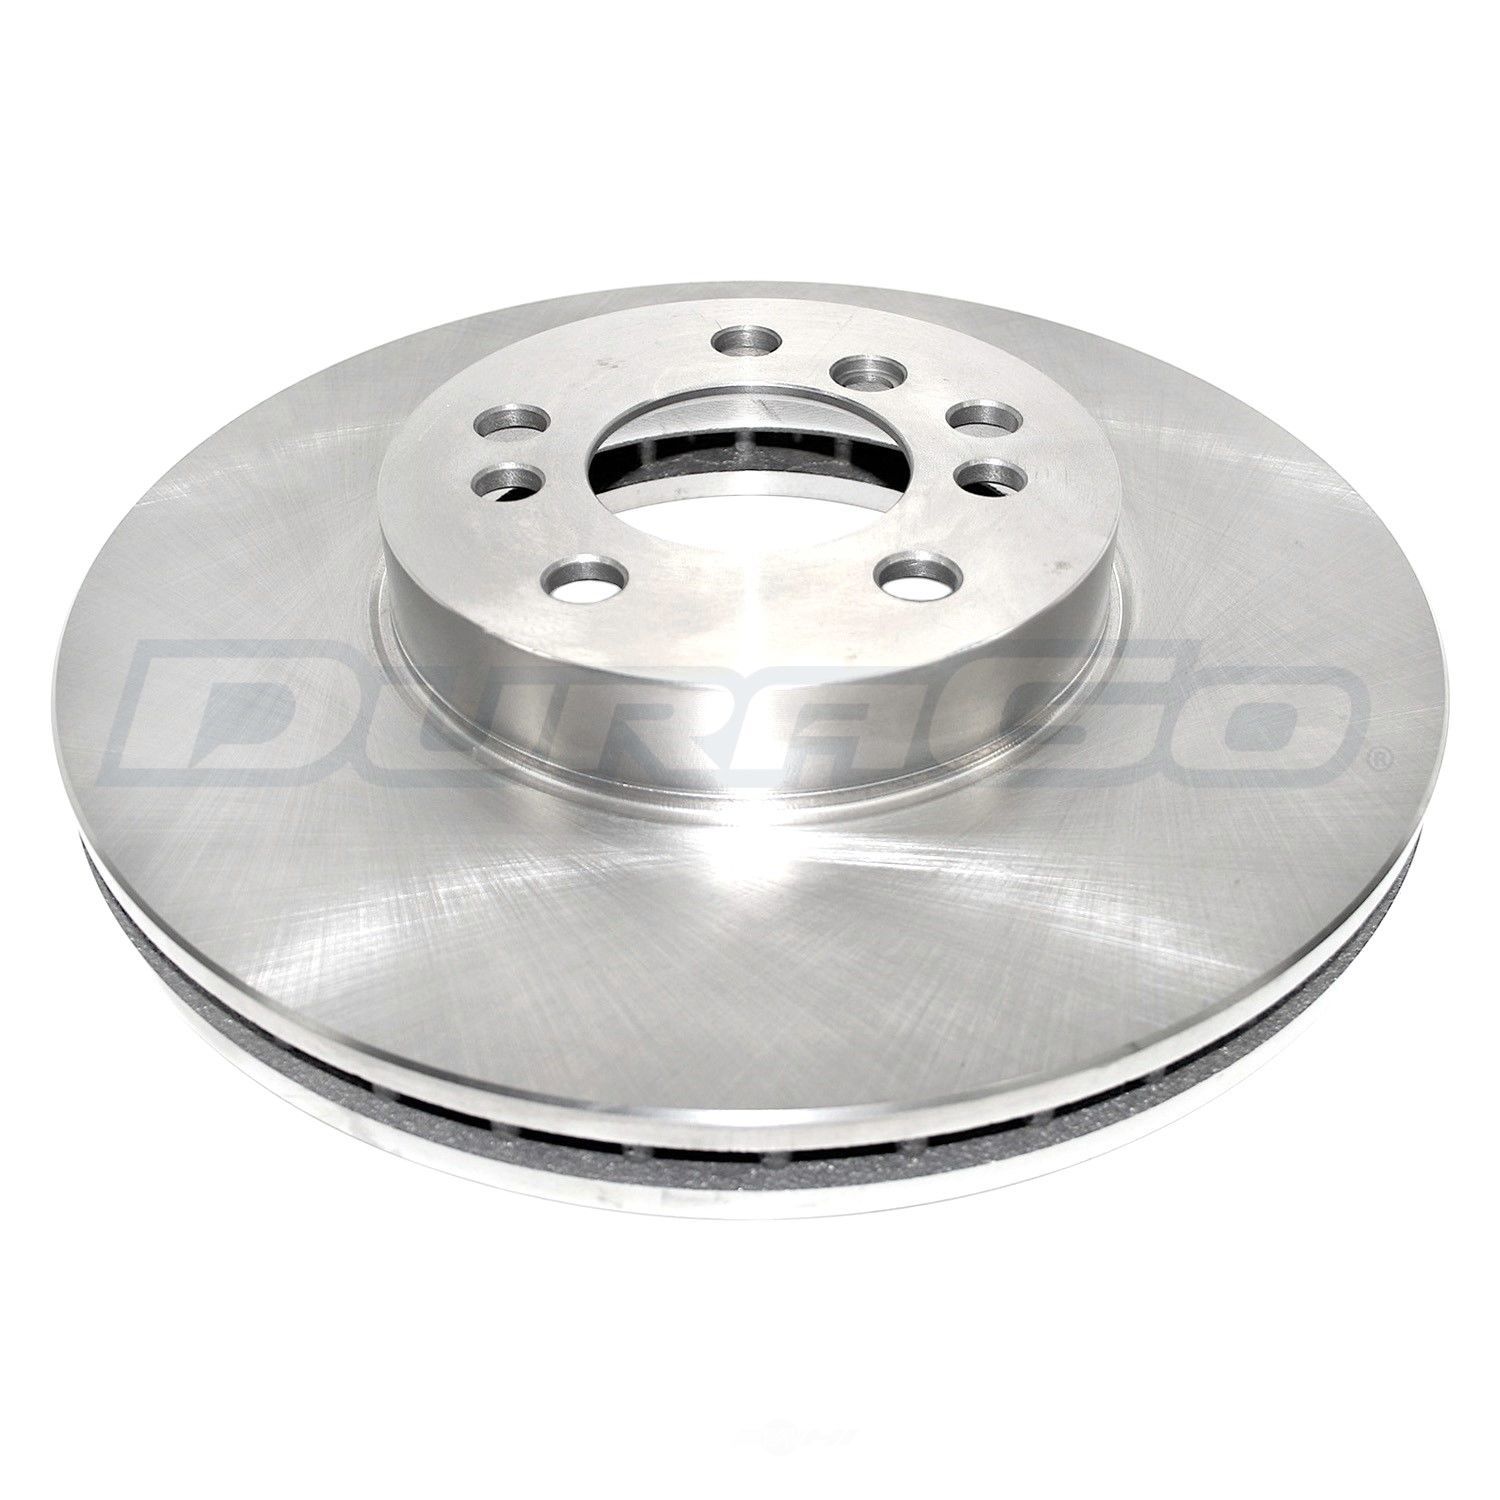 DURAGO - Disc Brake Rotor (Front) - D48 BR34184